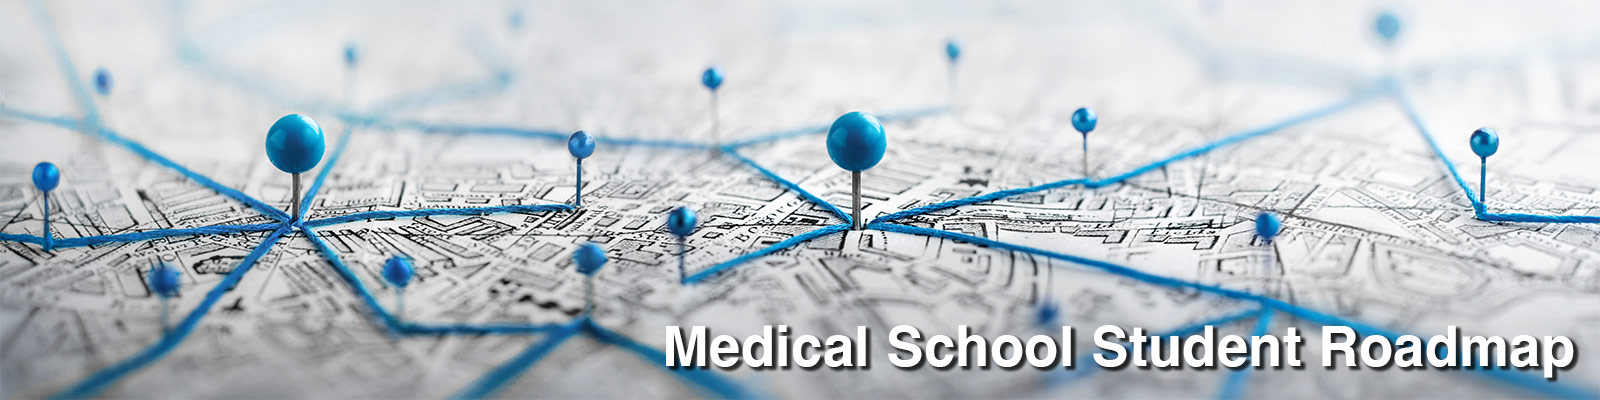 Medical School Student Roadmap